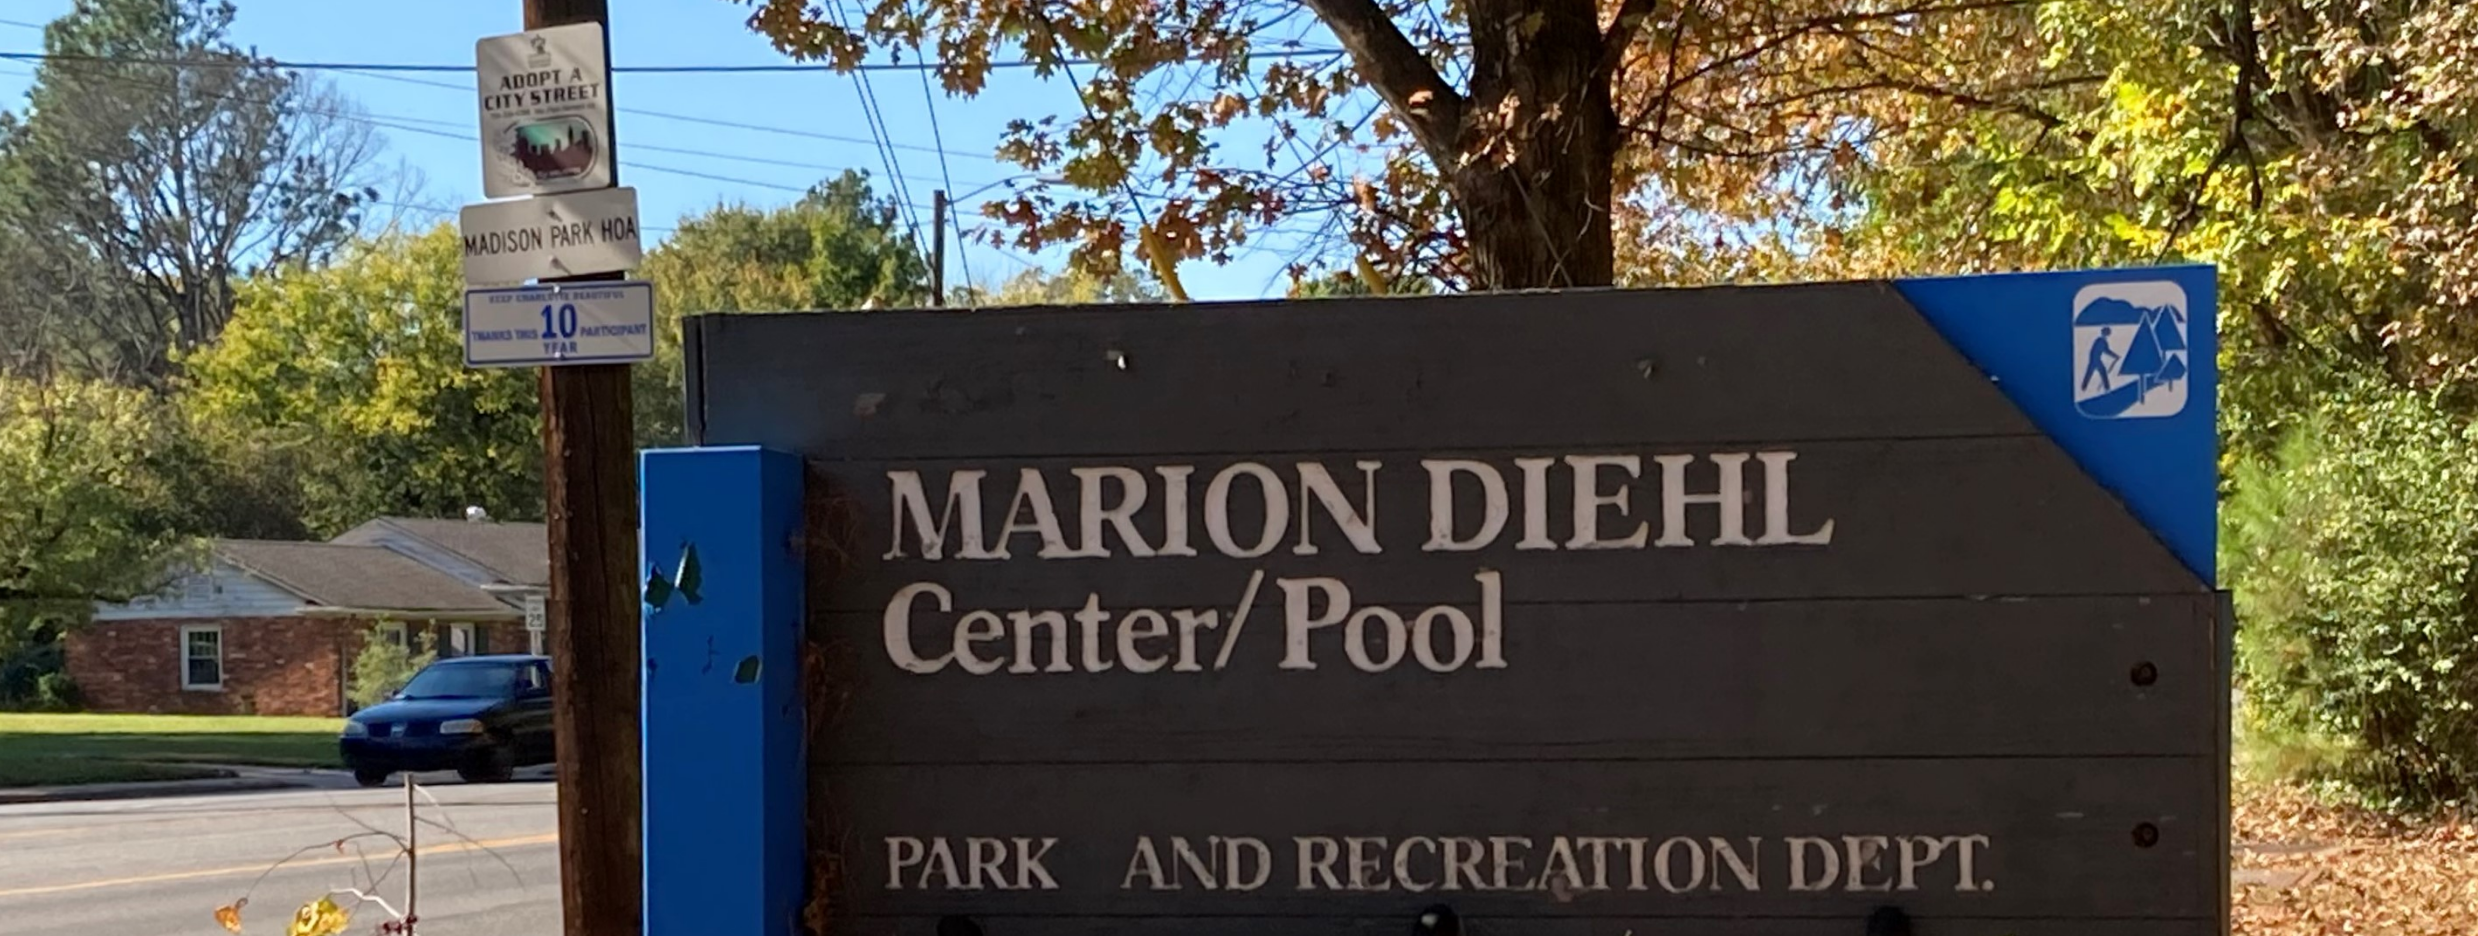 Marion Diehl Center/ Pool voting location, Charlotte, NC